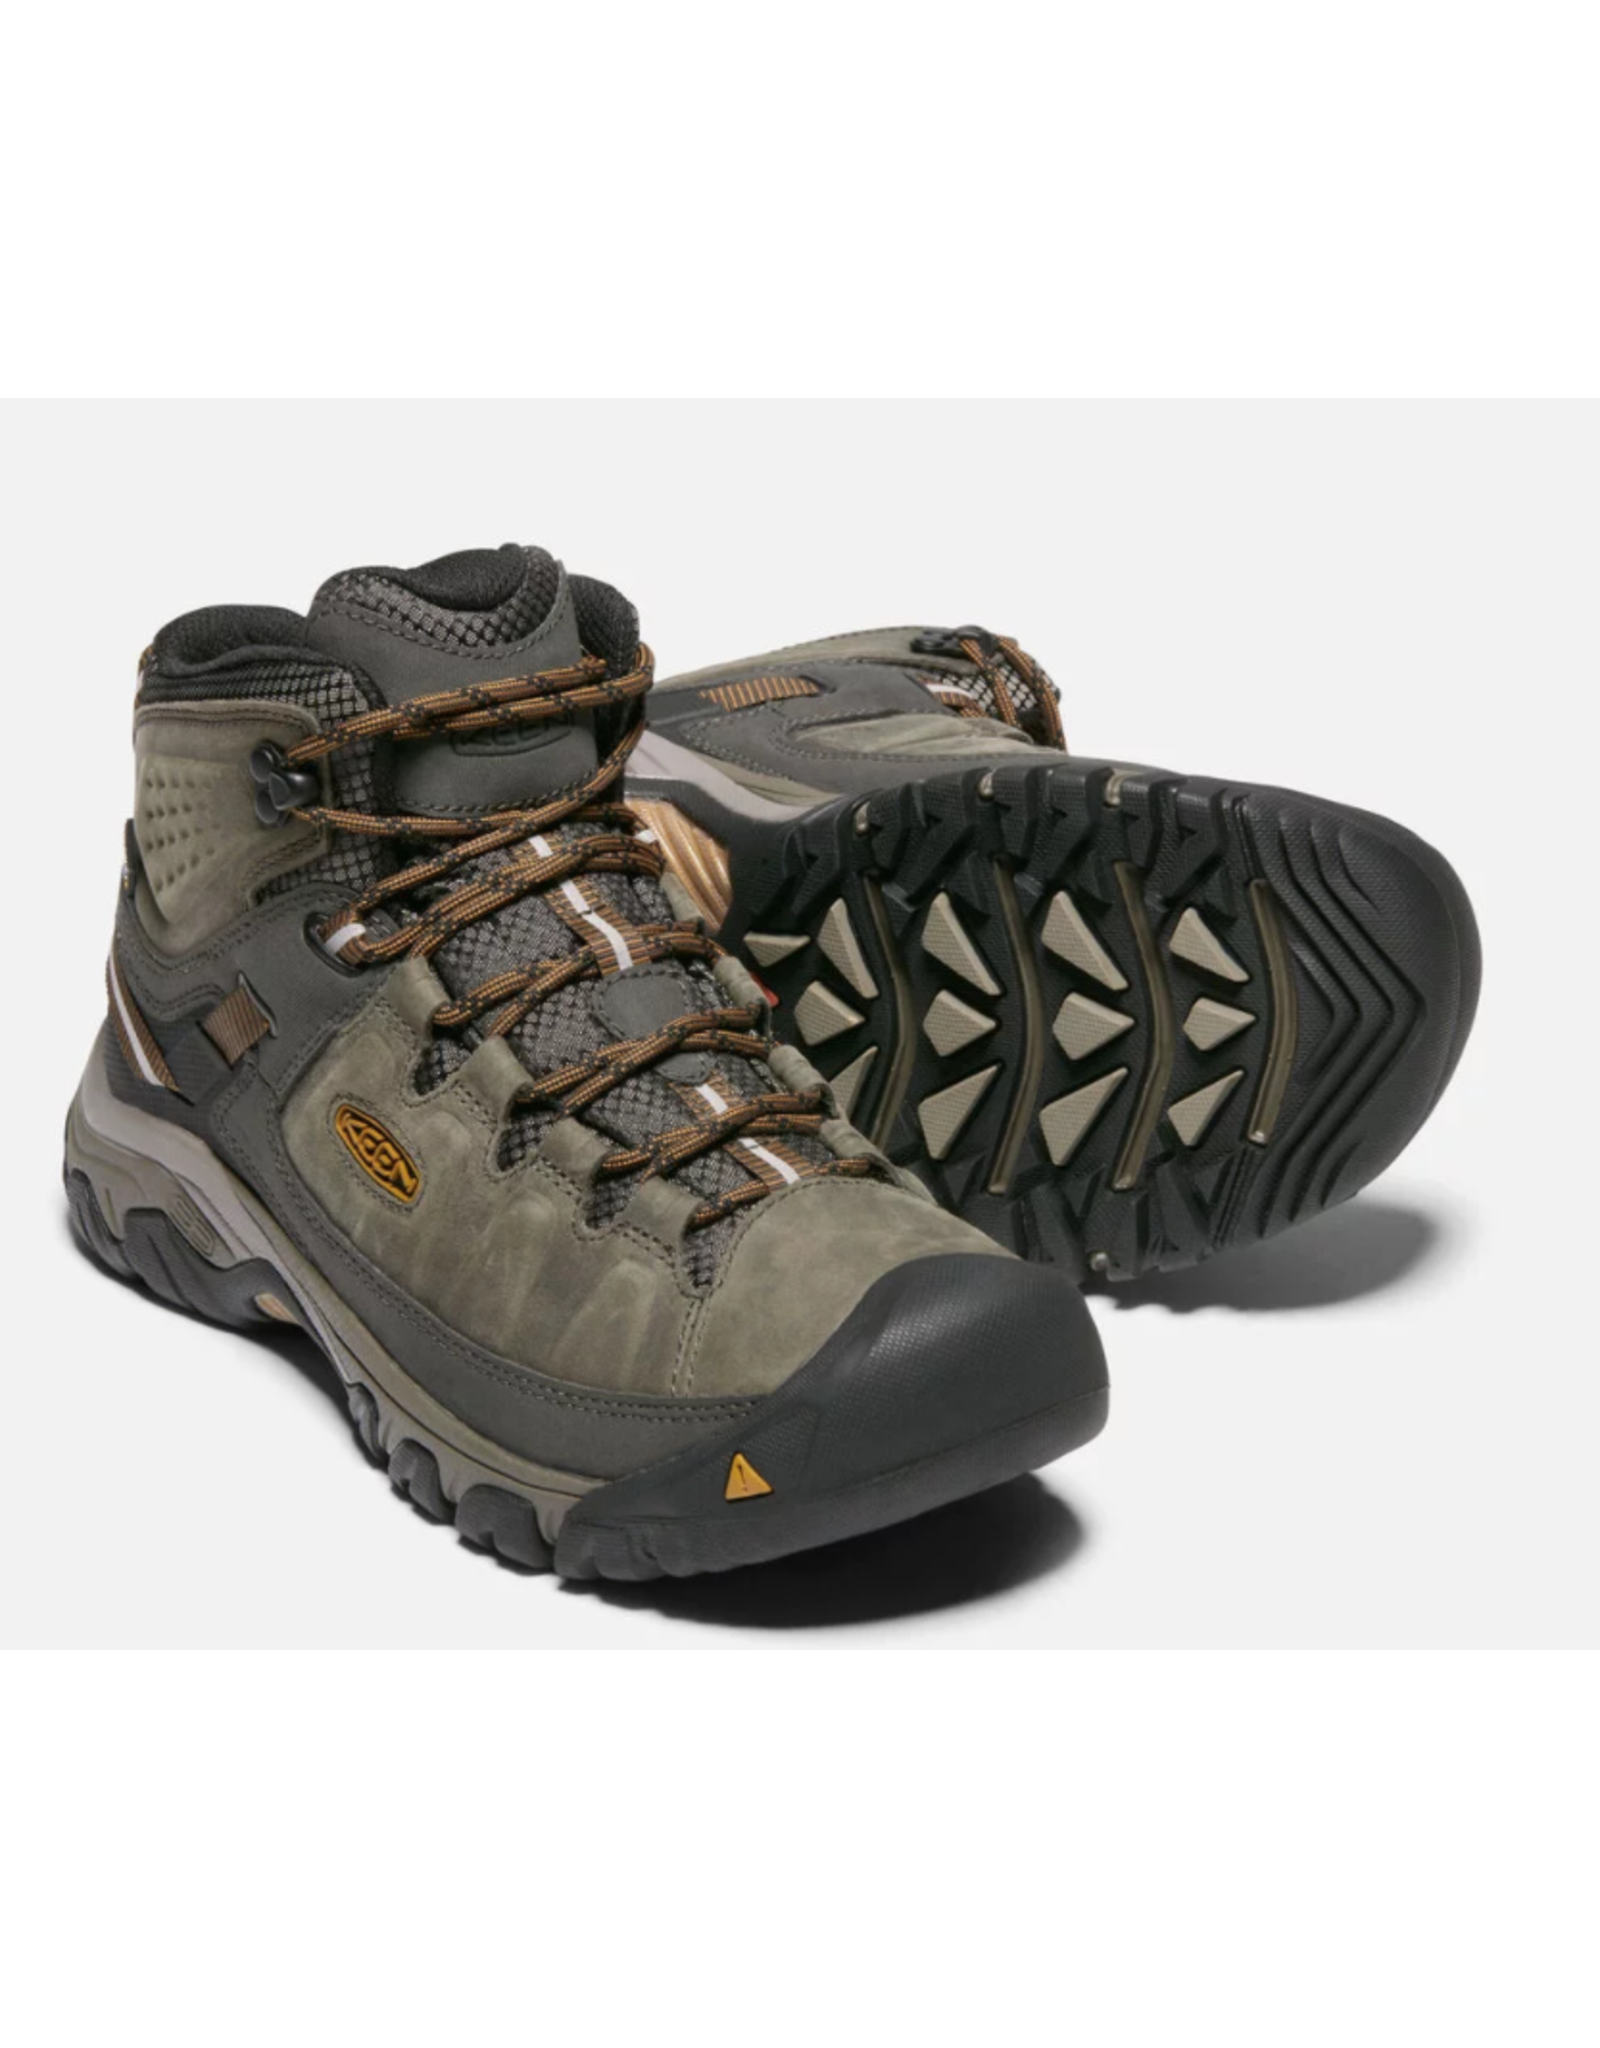 Keen Men’s Outdoor Targhee III Mid Waterproof Black/Olive 1017787 Hiking Shoes